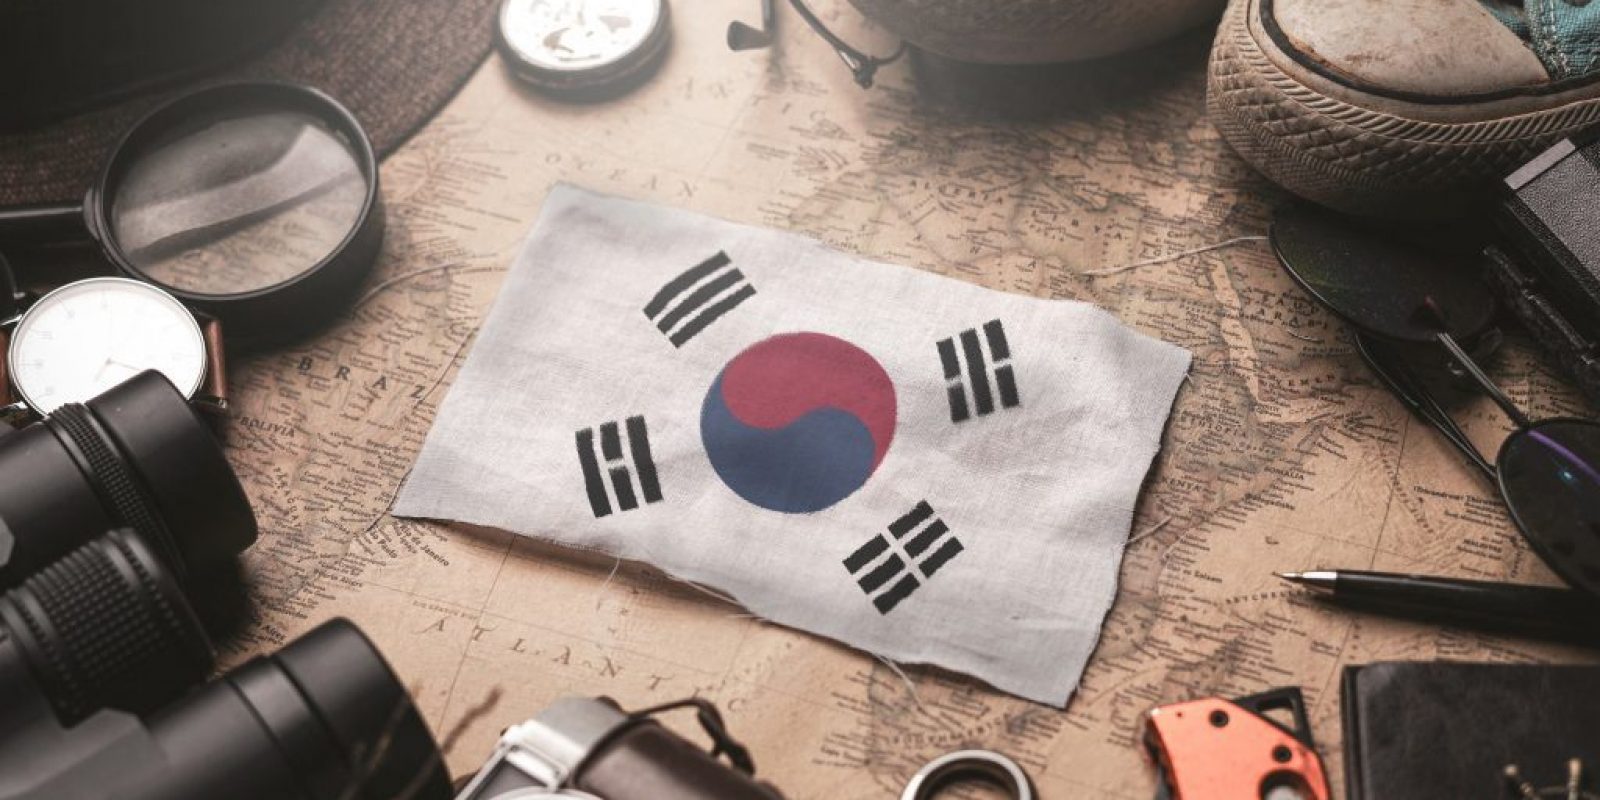 South Korea Flag Between Traveler's Accessories on Old Vintage Map. Tourist Destination Concept.